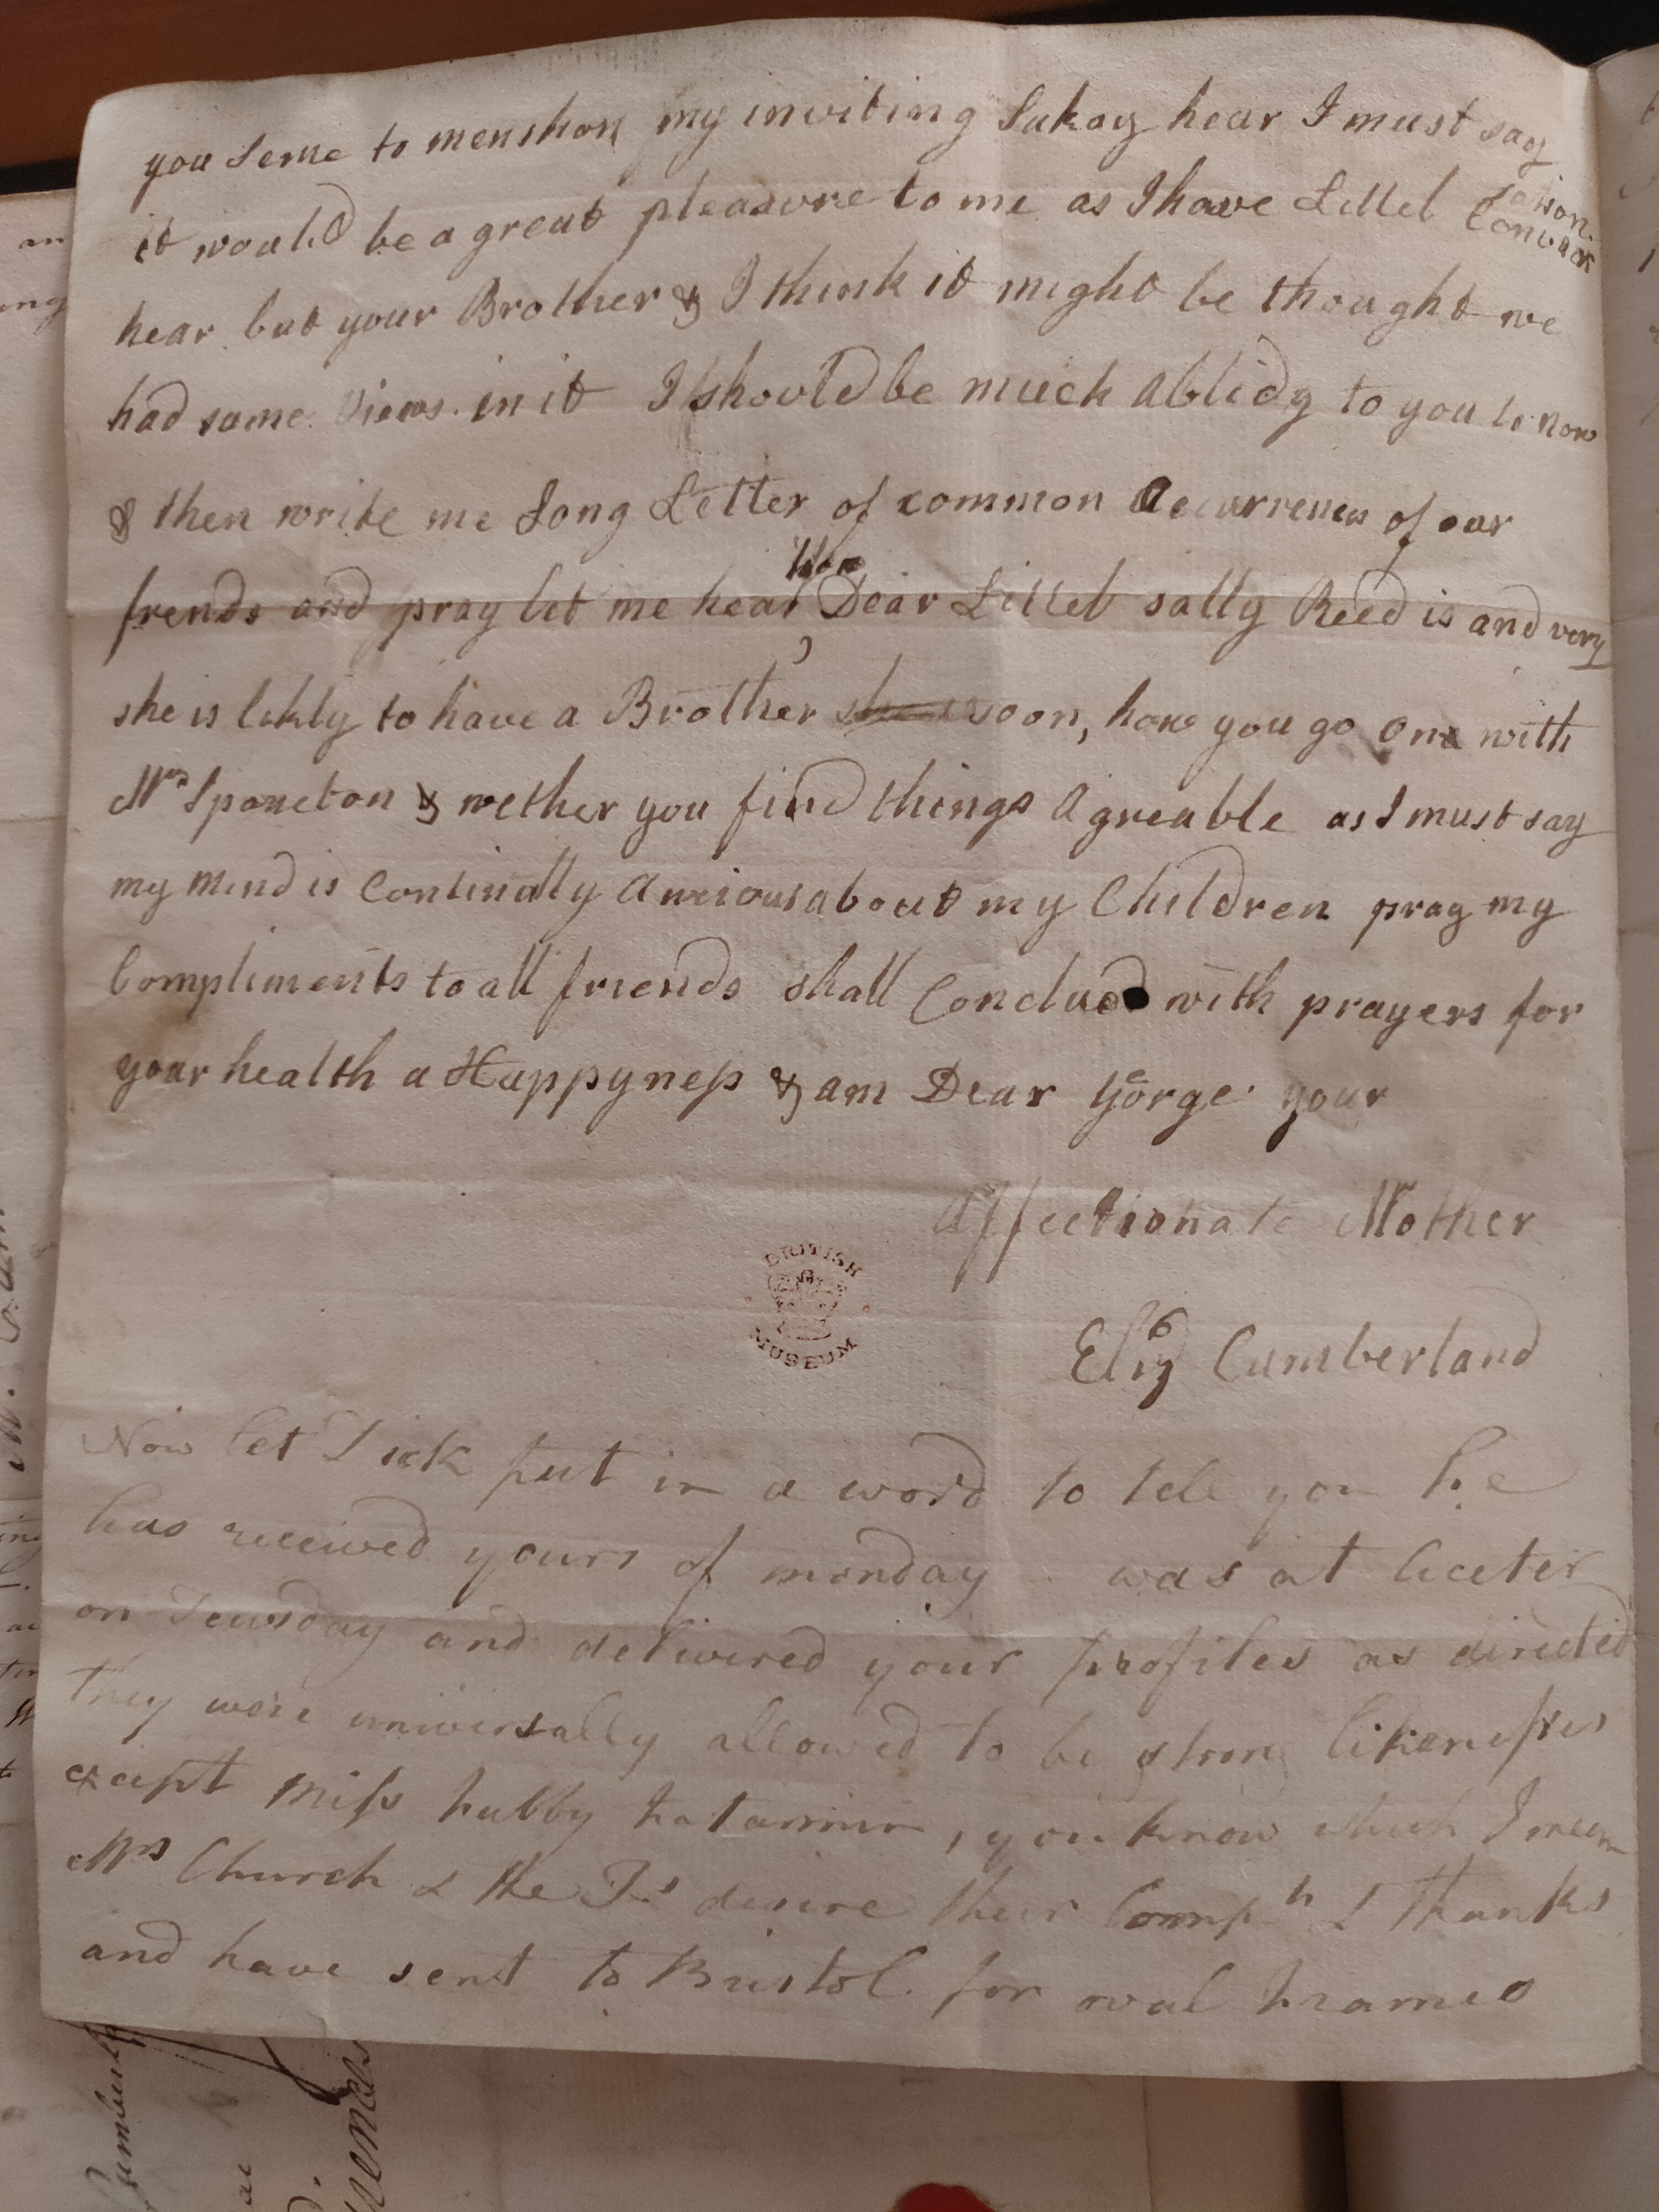 Image #2 of letter: Elizabeth Cumberland and Richard Cumberland to George Cumberland, 26 September 1777